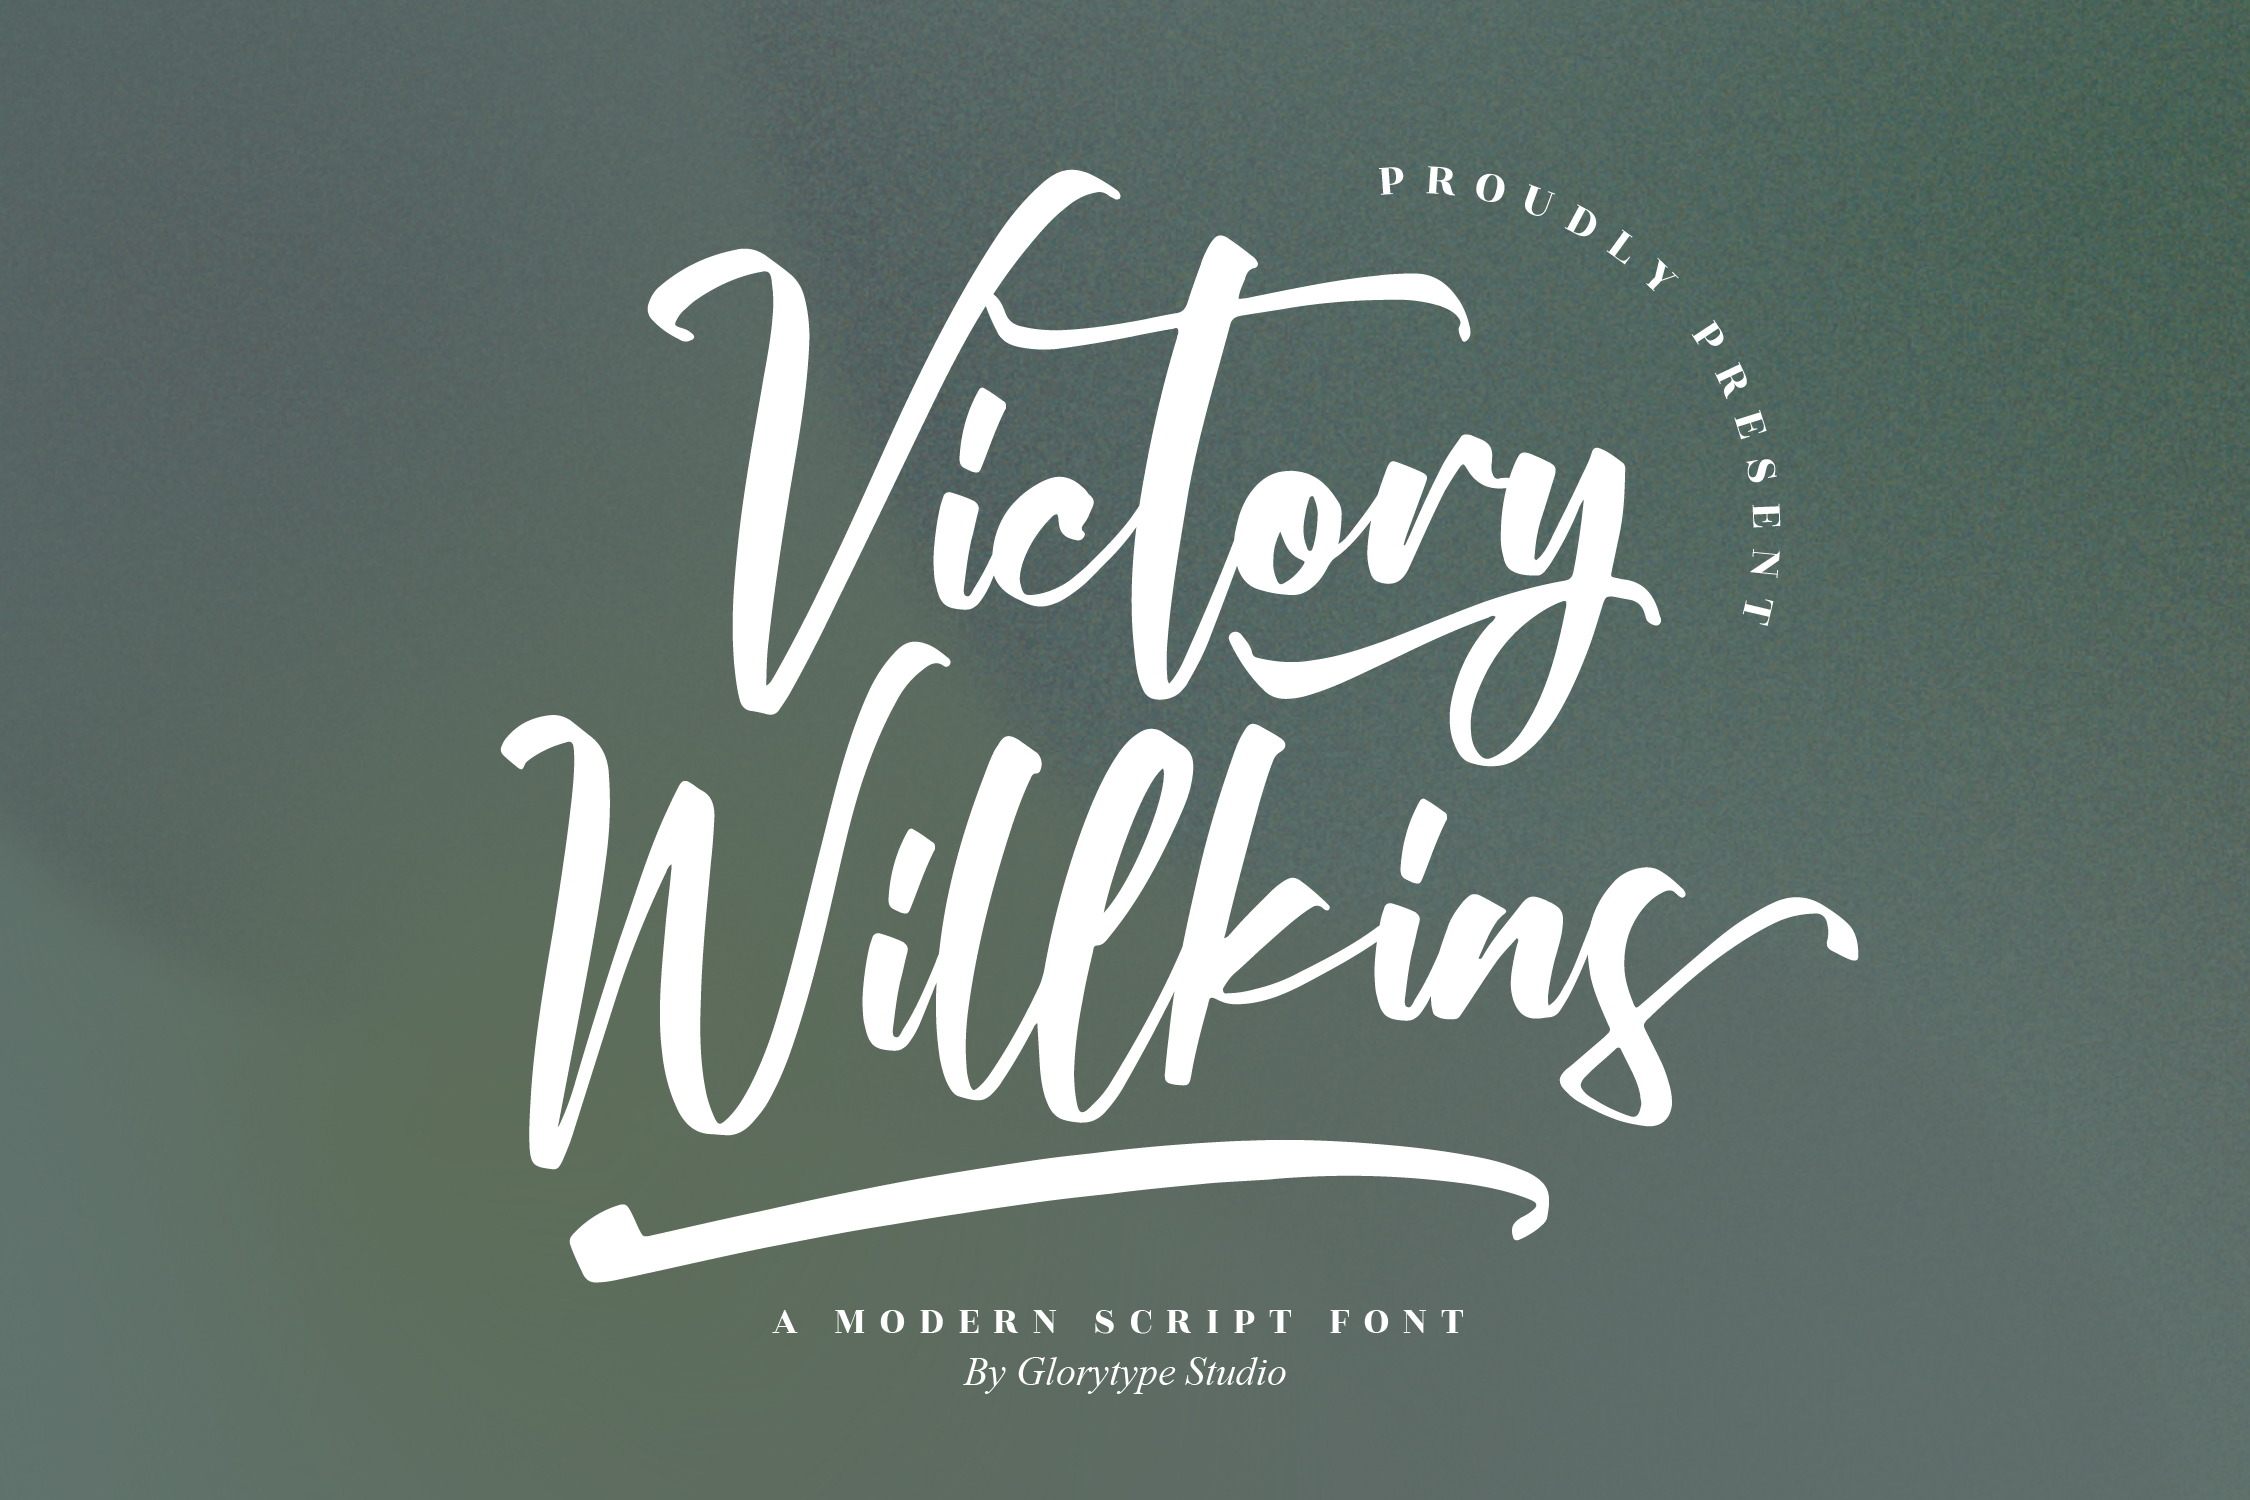 Victory Willkins